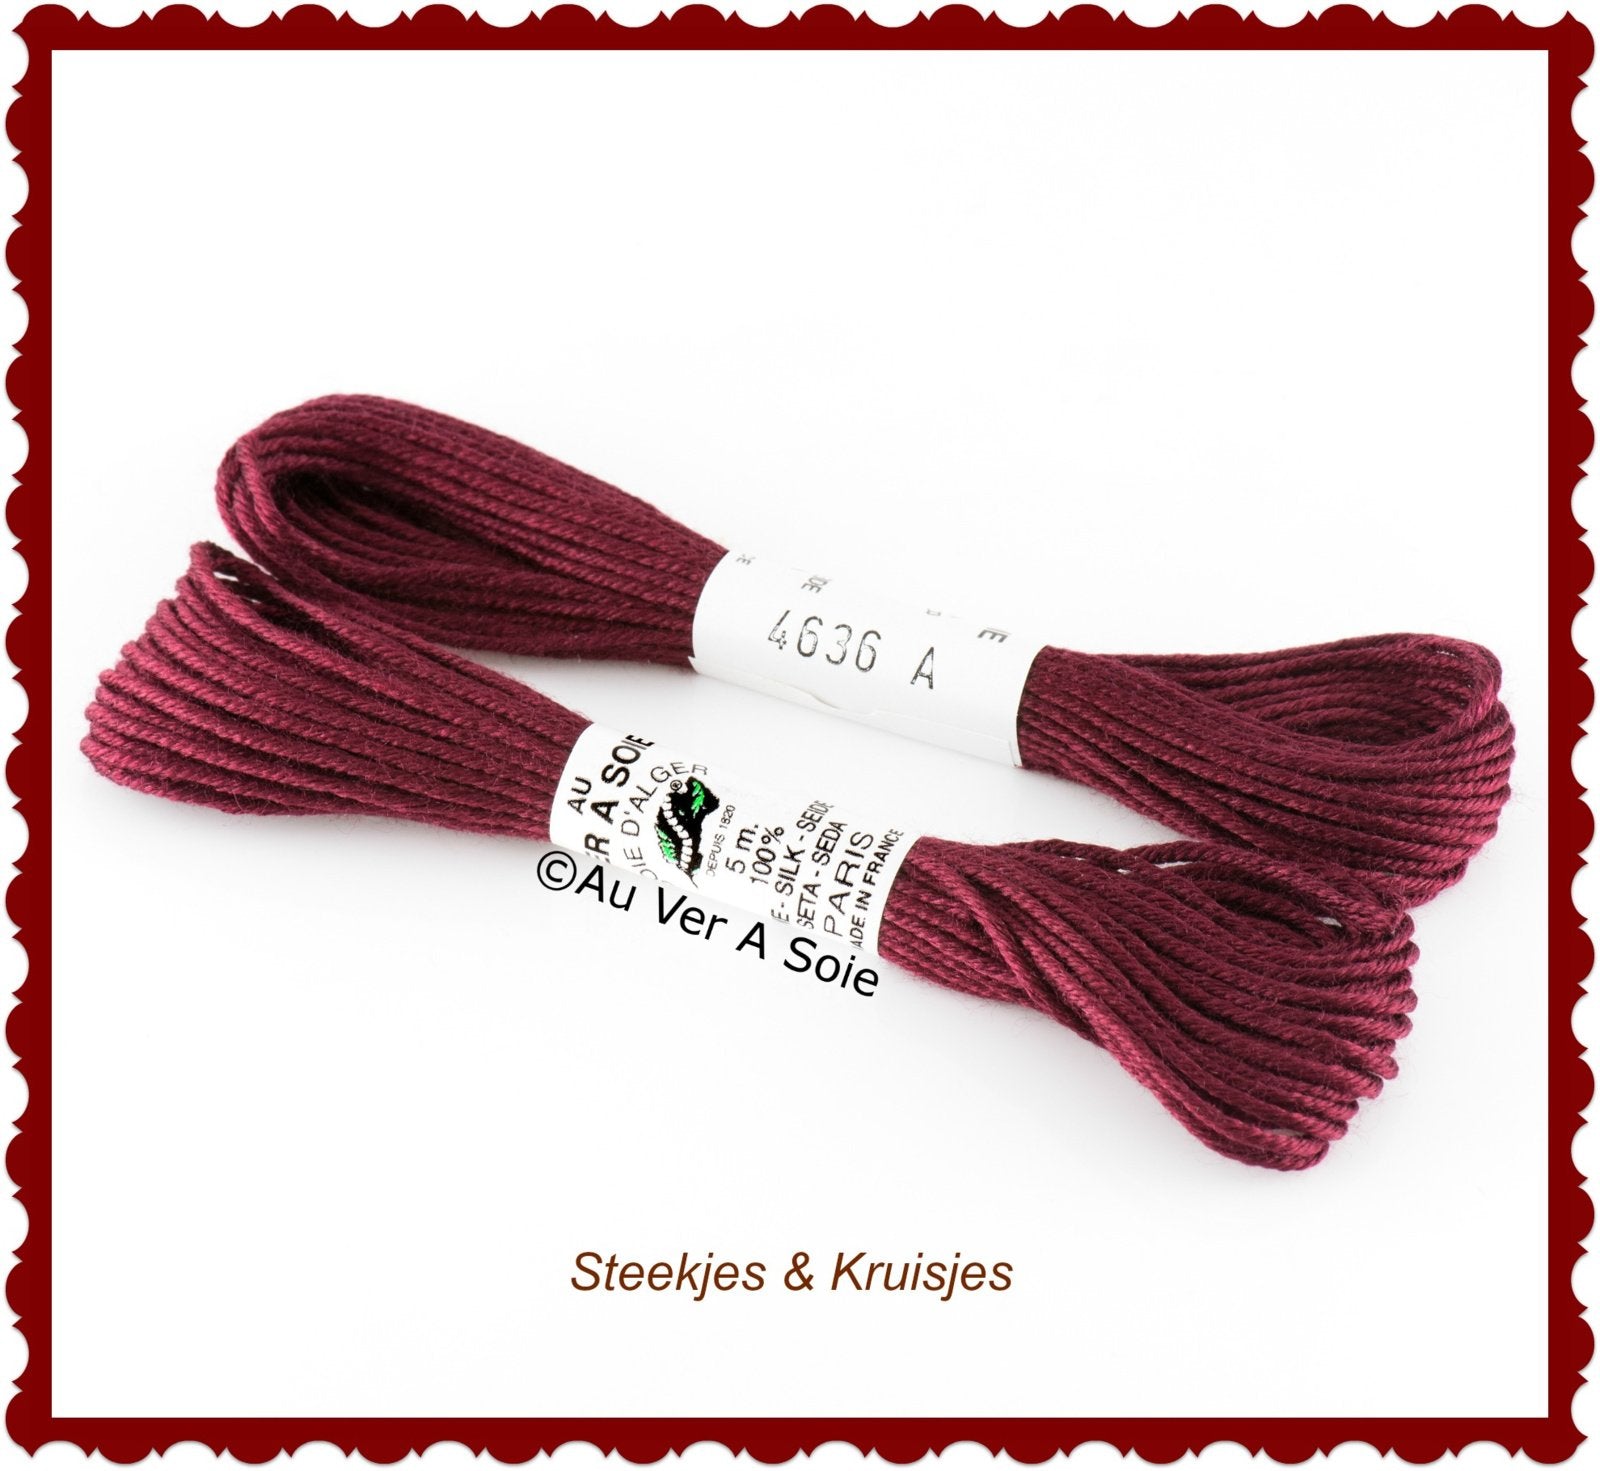 Au ver ie "soie d'alger" silk yarn color no. 4636